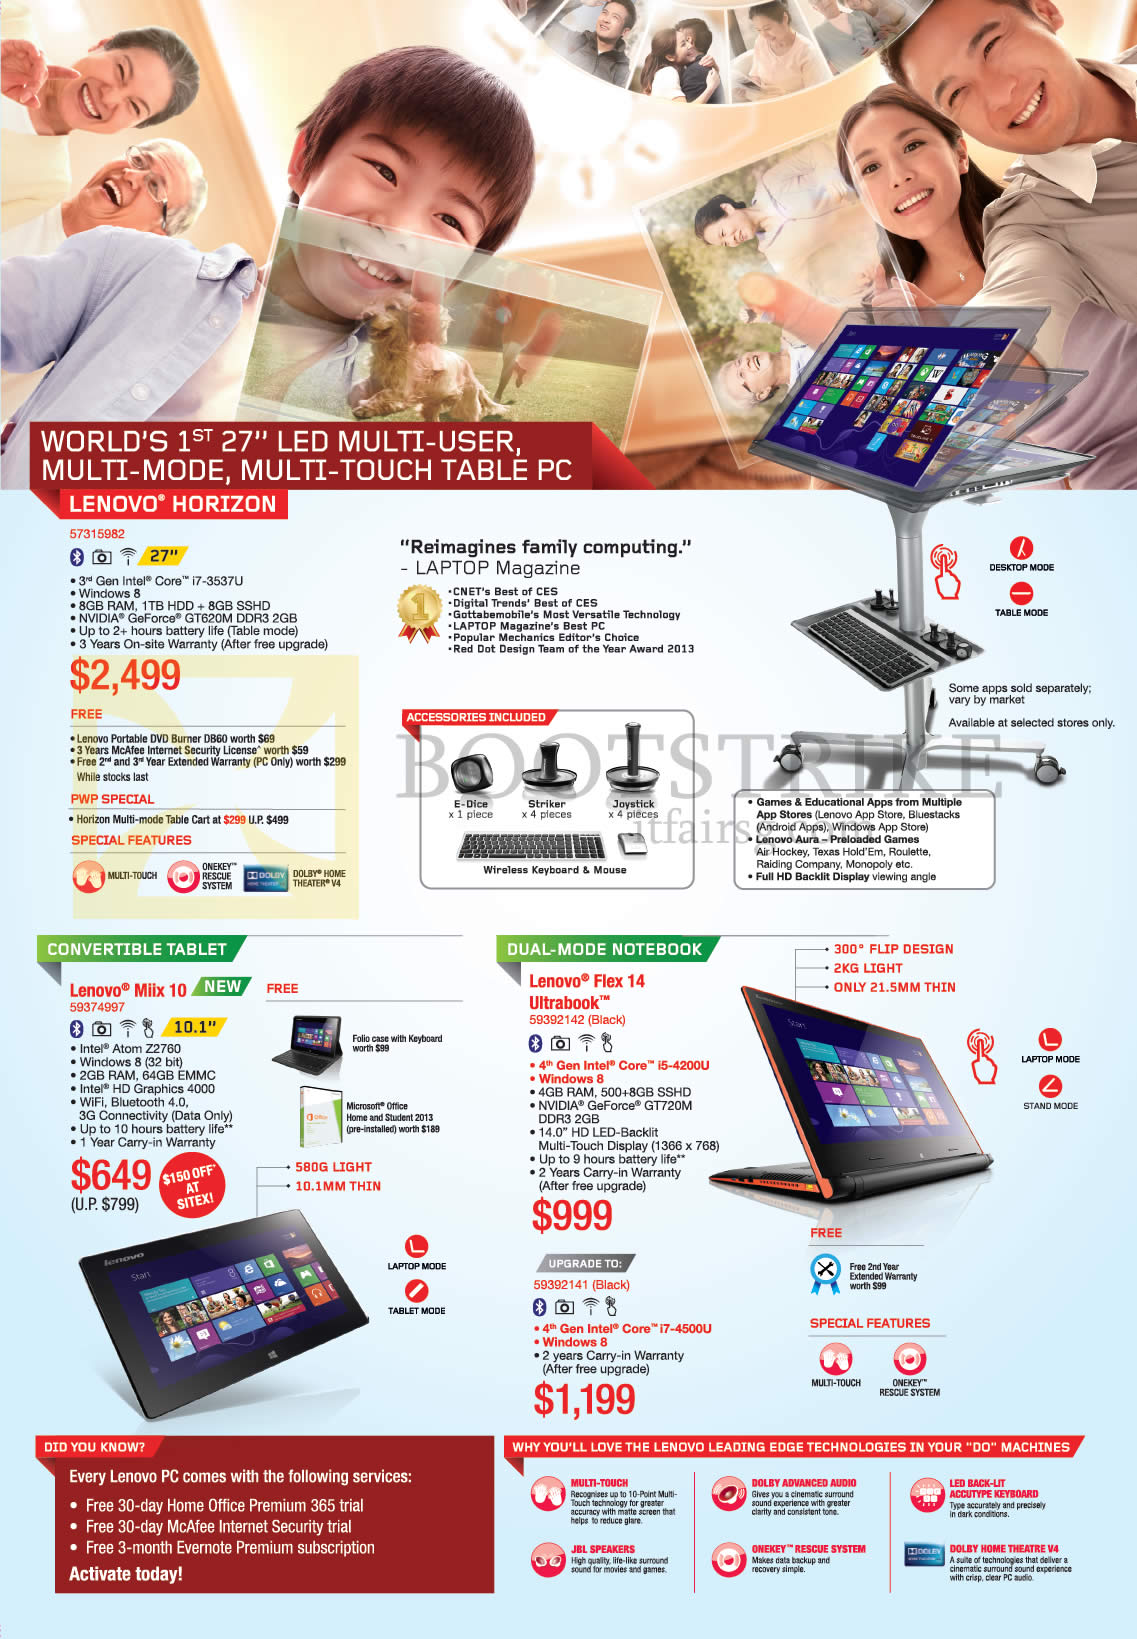 SITEX 2013 price list image brochure of Lenovo Horizon Table PC, Miix 10 Tablet, Notebooks Flex 14